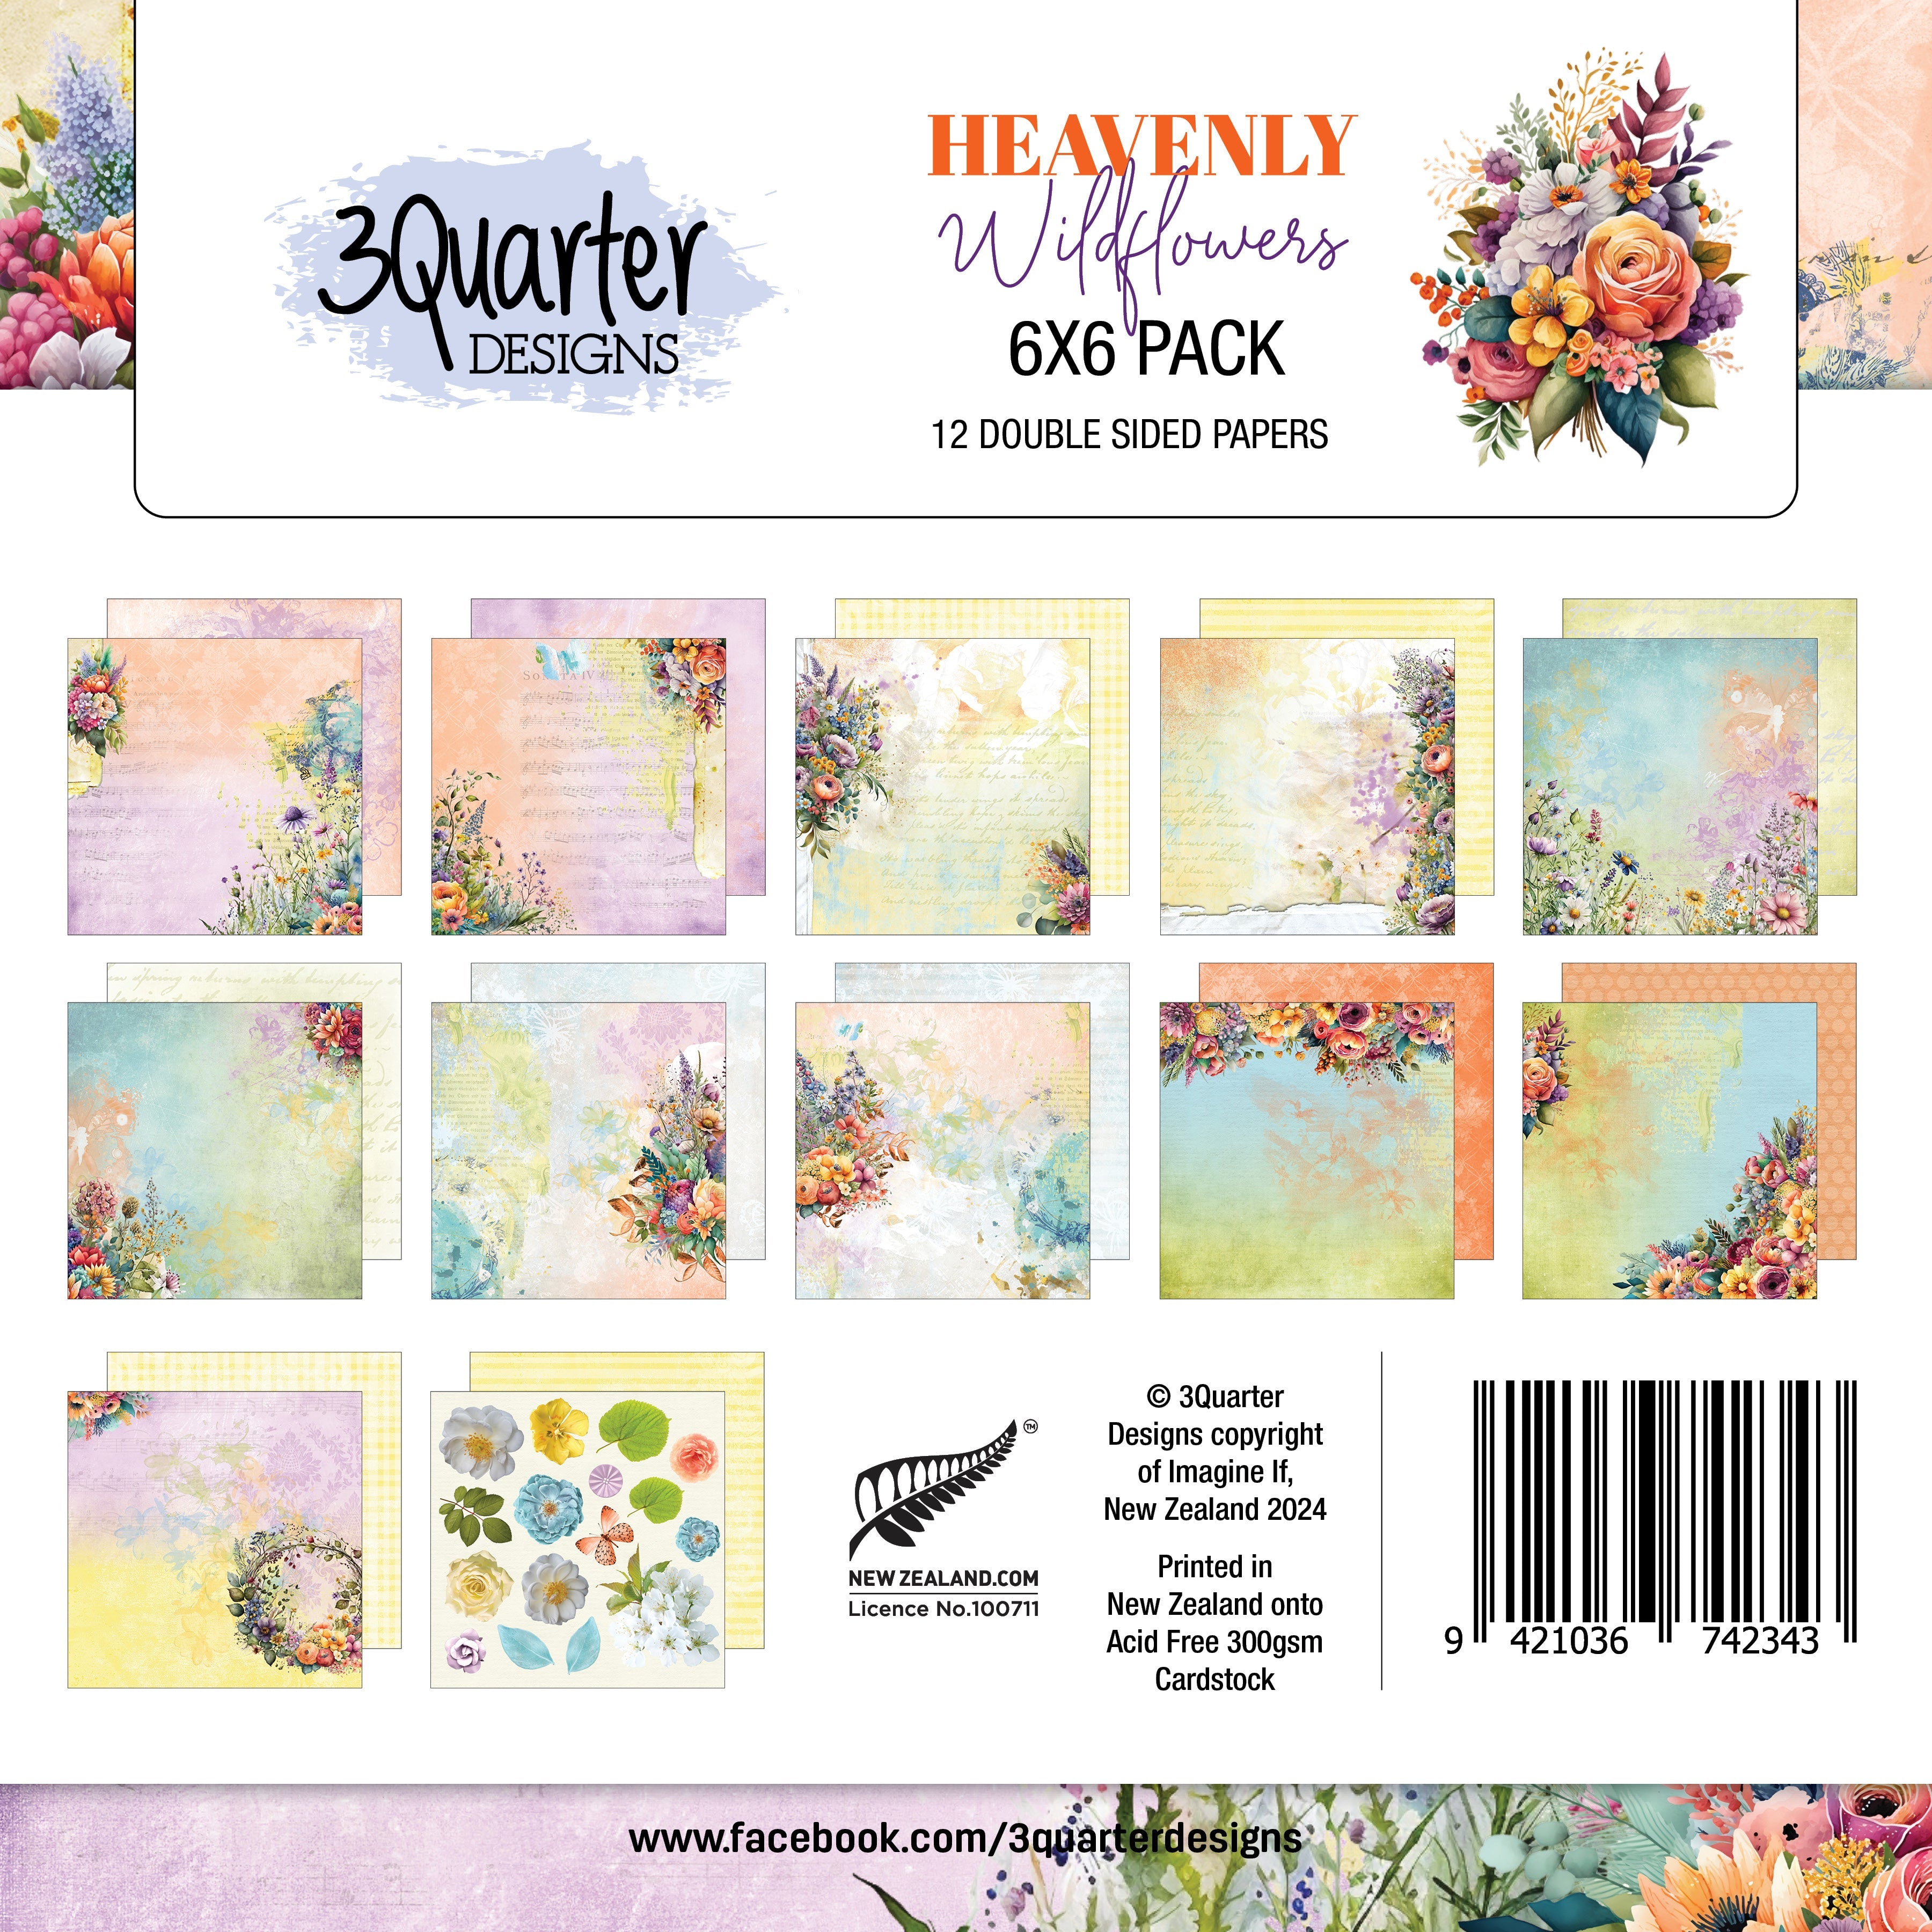 3Quarter Designs Heavenly Wildflowers 6x6 Paper Pack